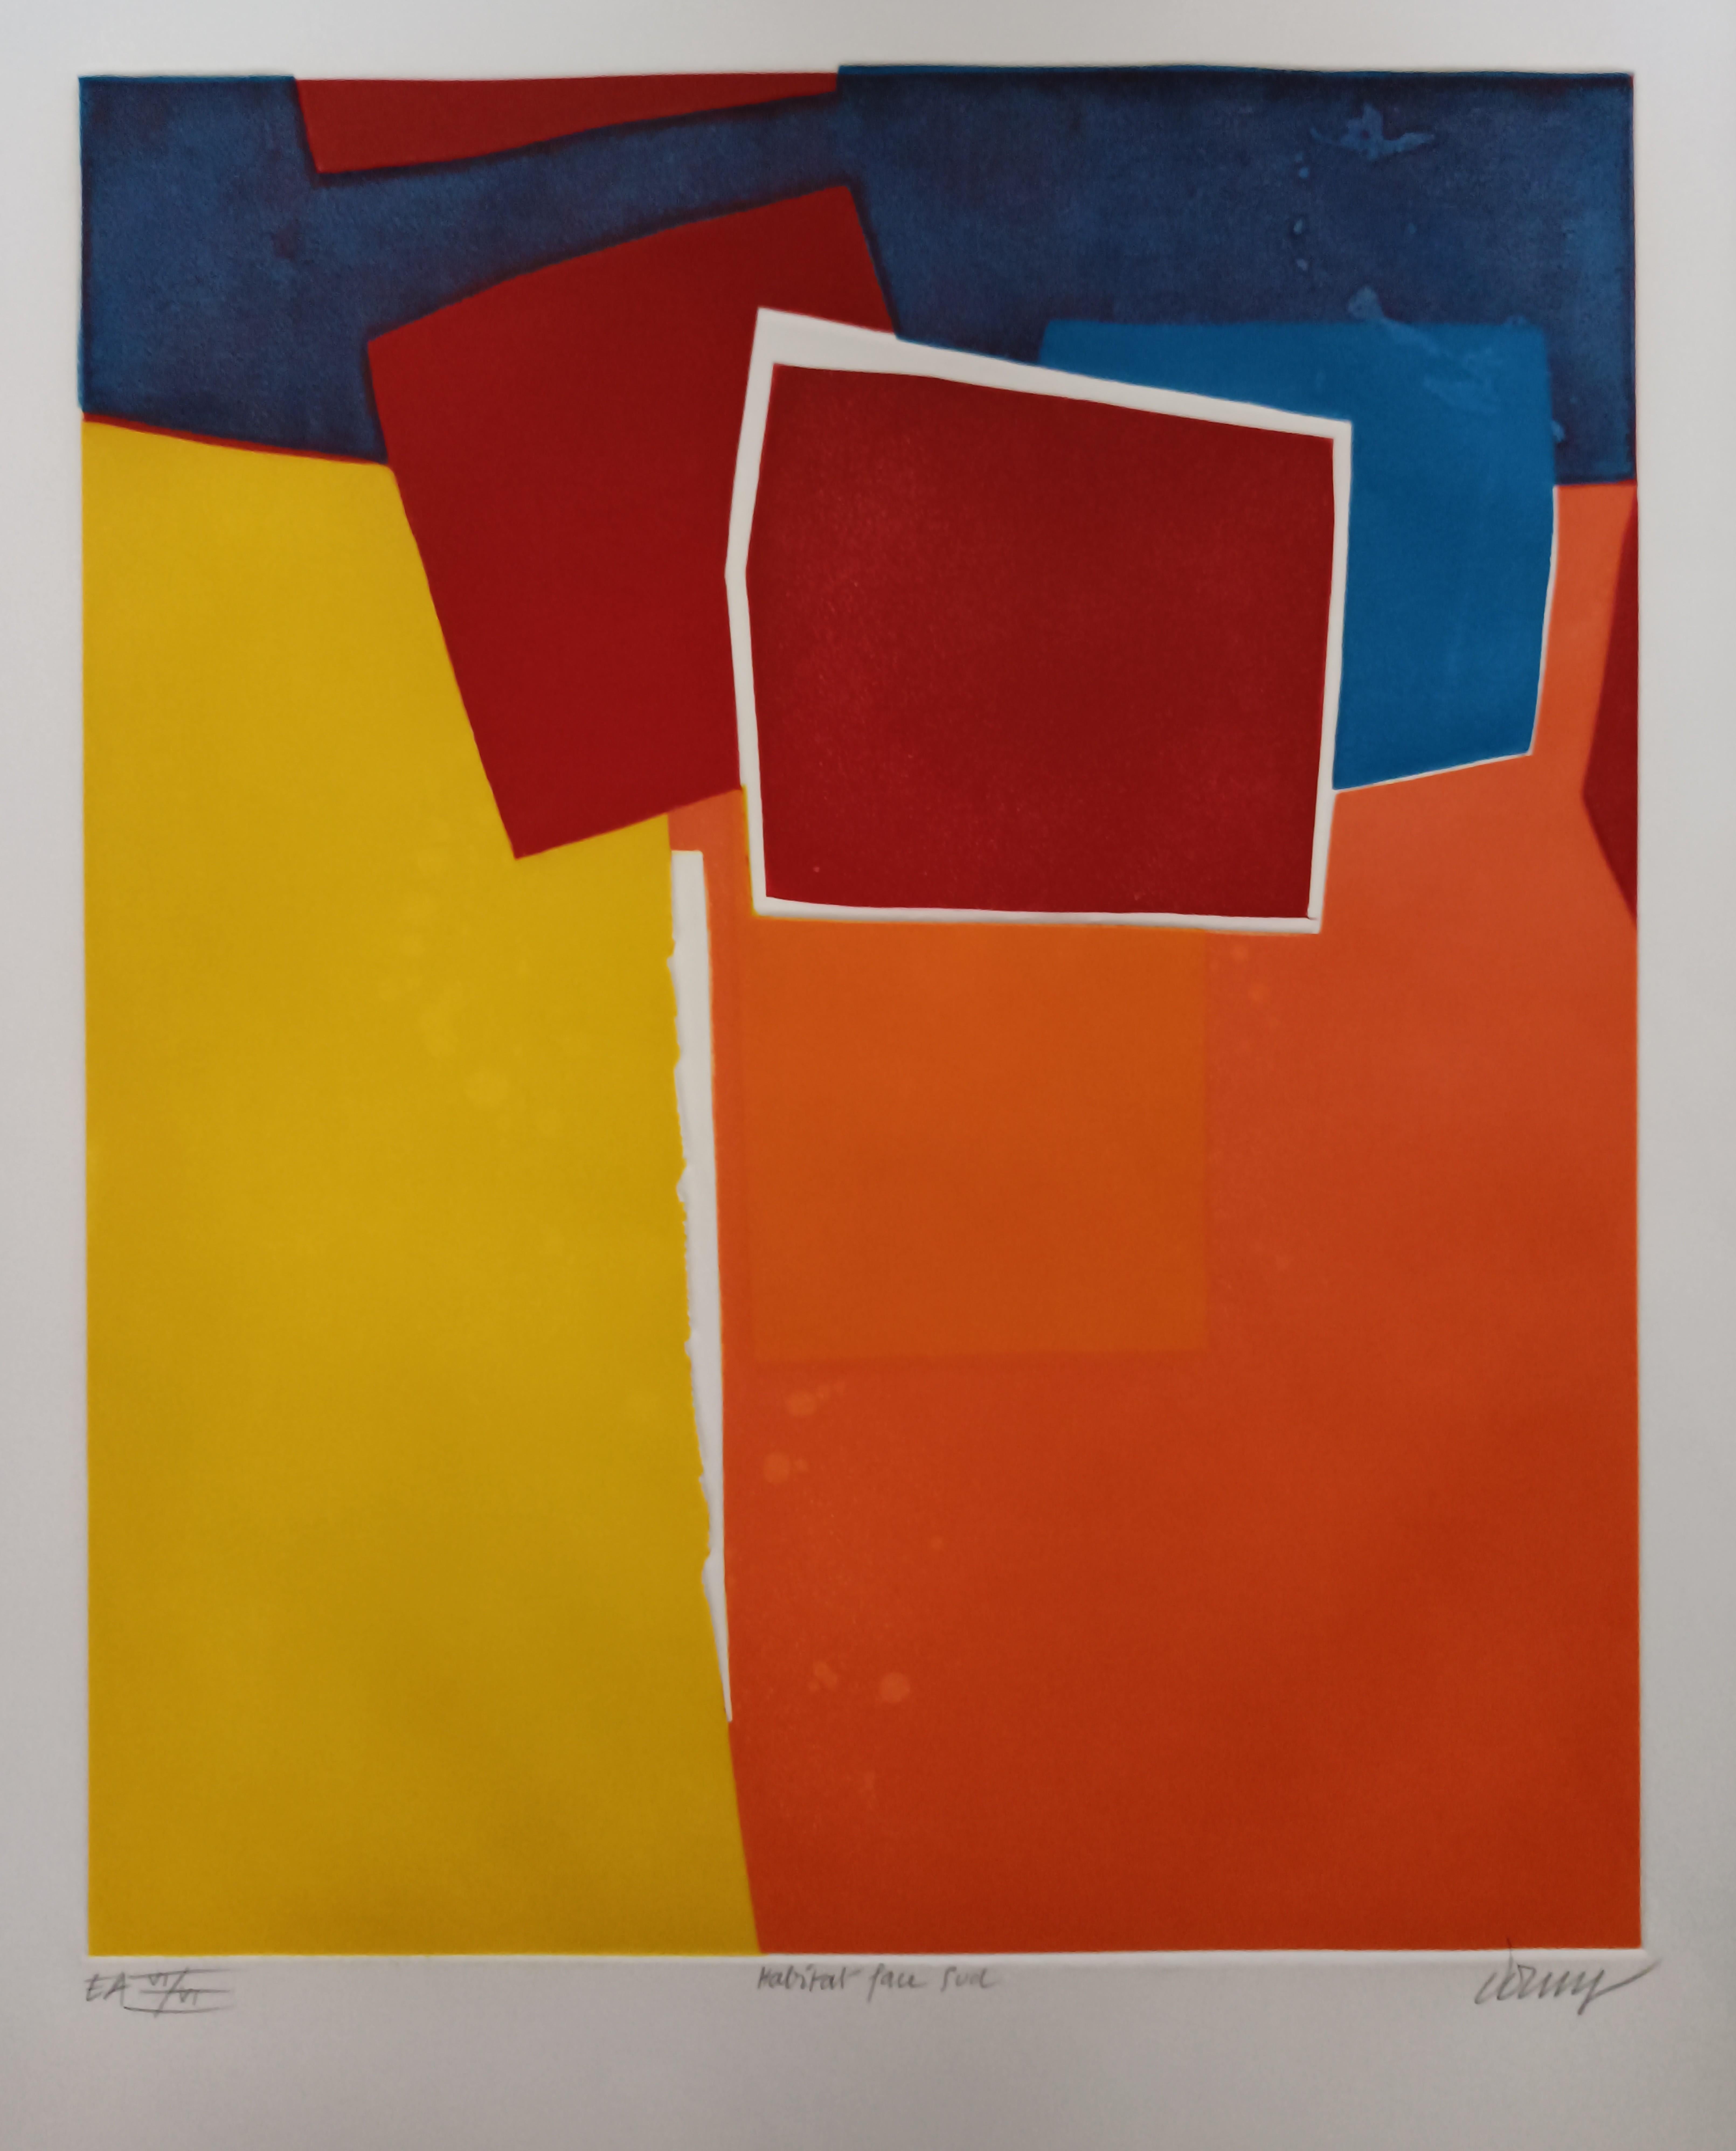 Bertrand Dorny Abstract Print – Habitat Face Sud, 1972